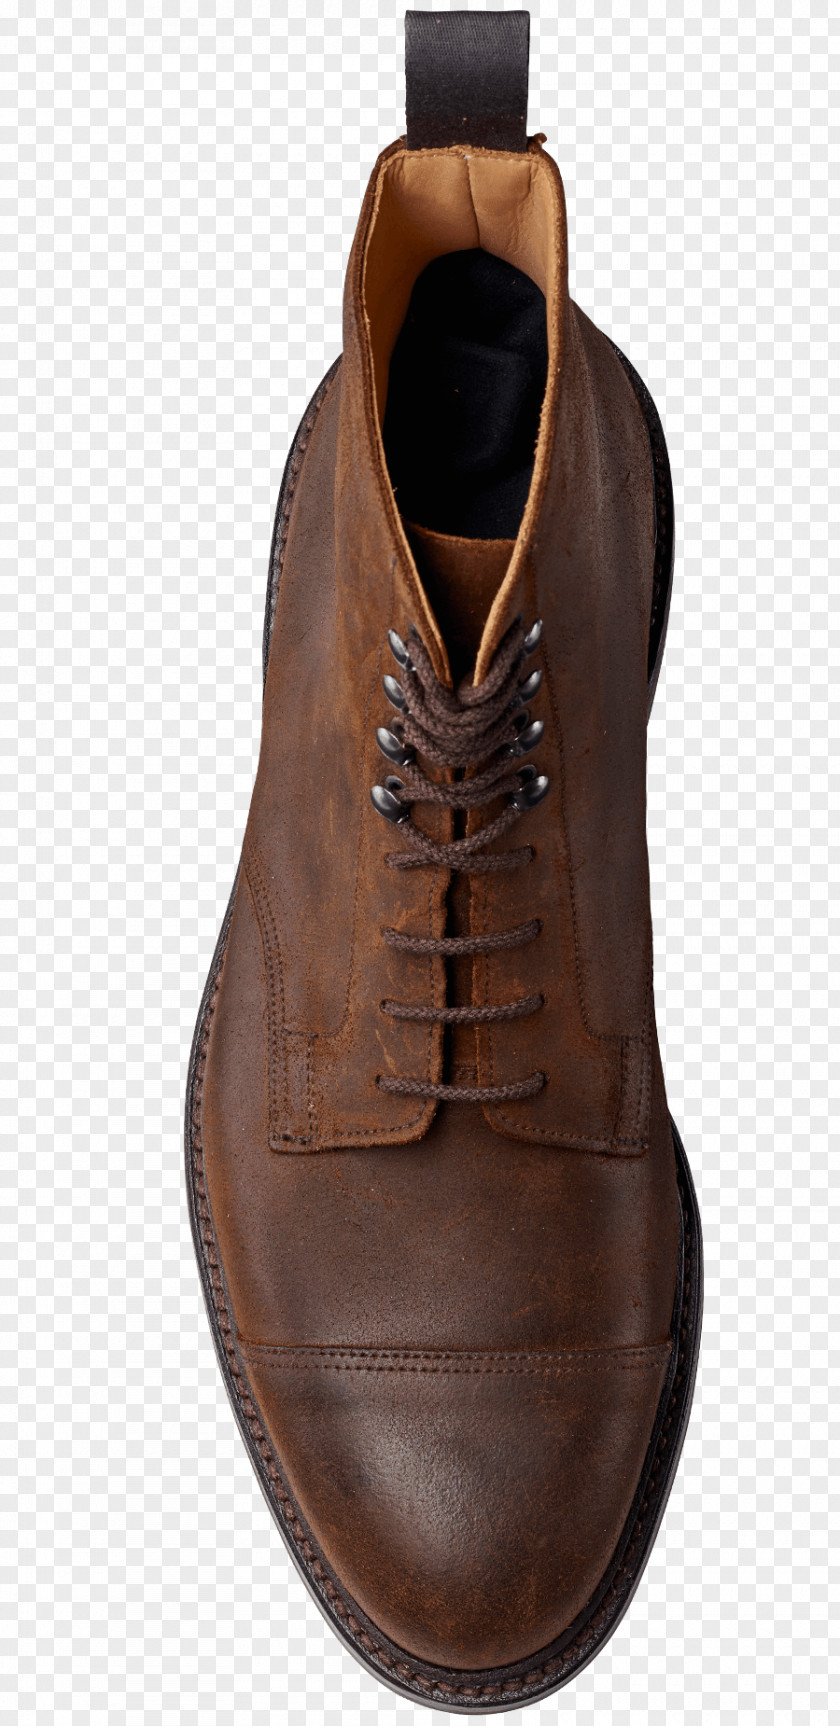 Goodyear Welt Shoe Boot Crockett & Jones Suede PNG